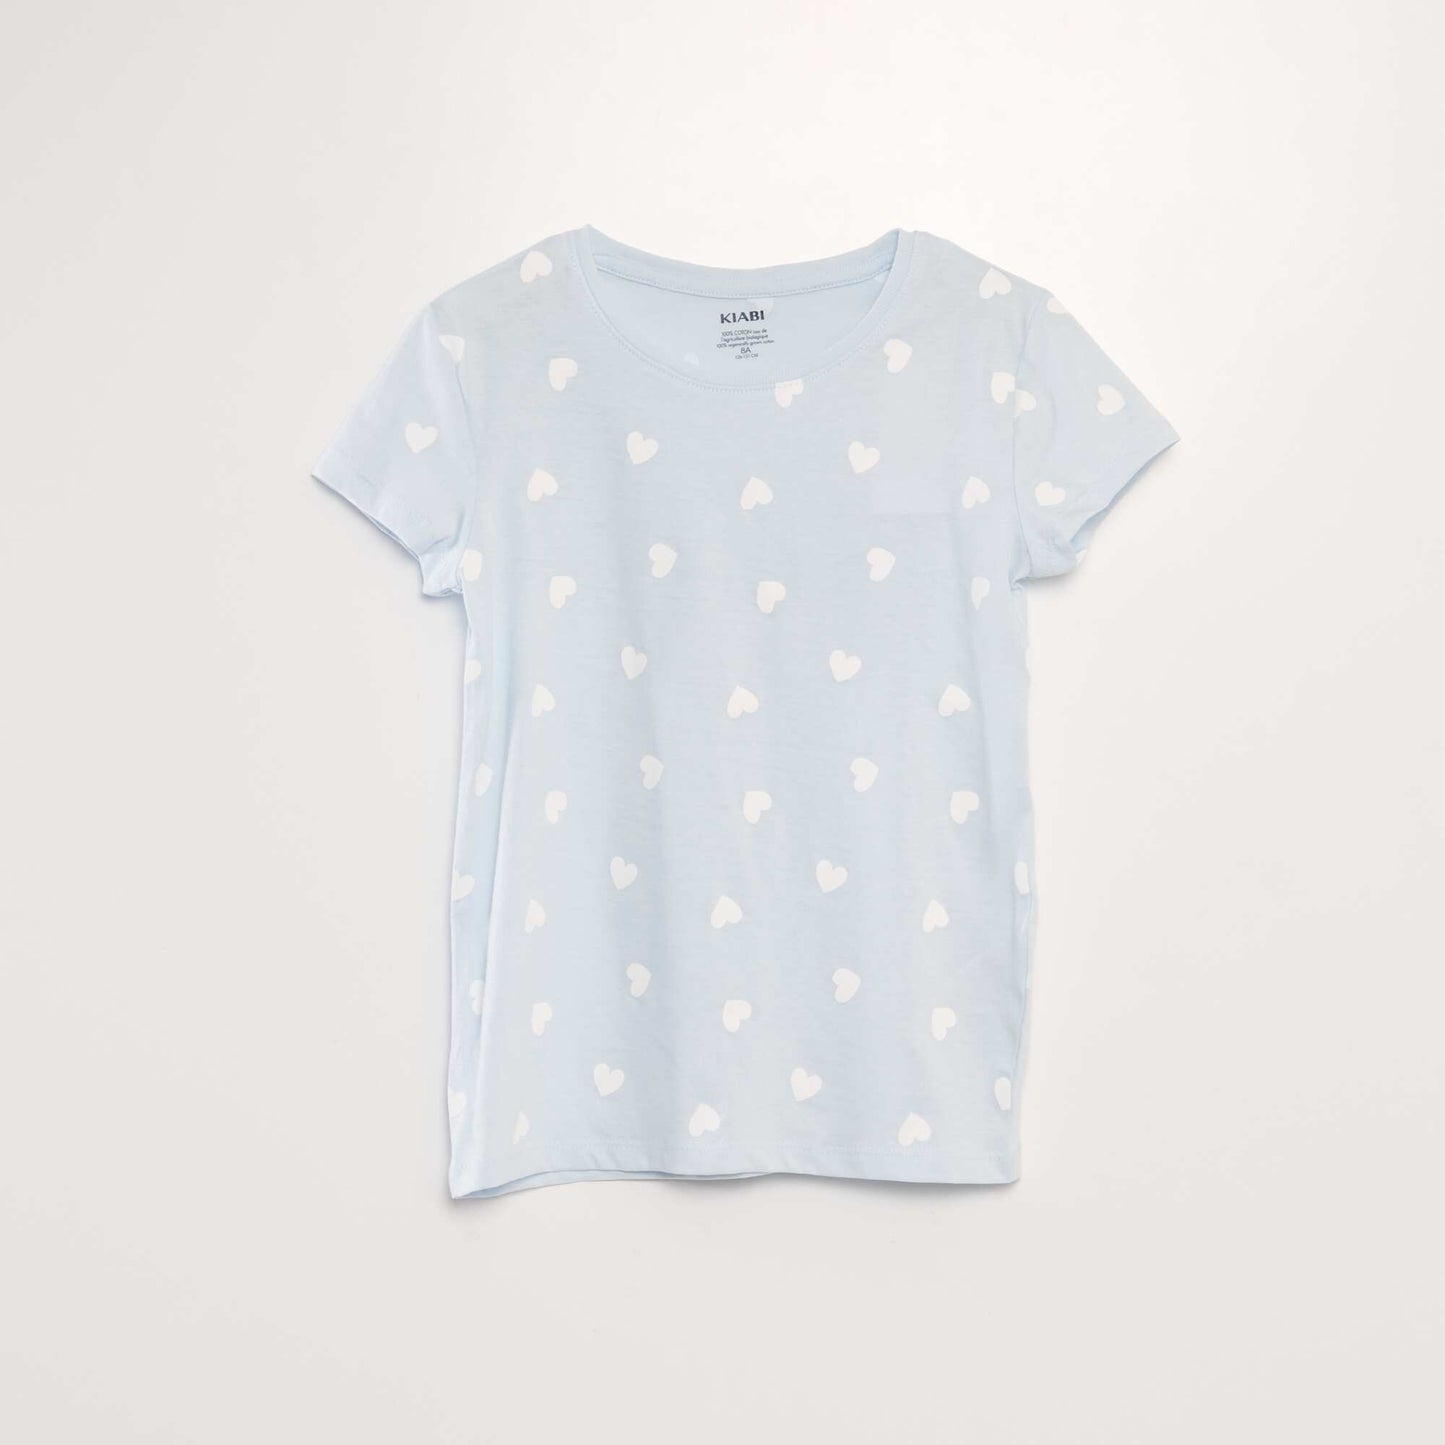 Ensemble de pyjama : T-shirt + short - 2 pièces Bleu clair